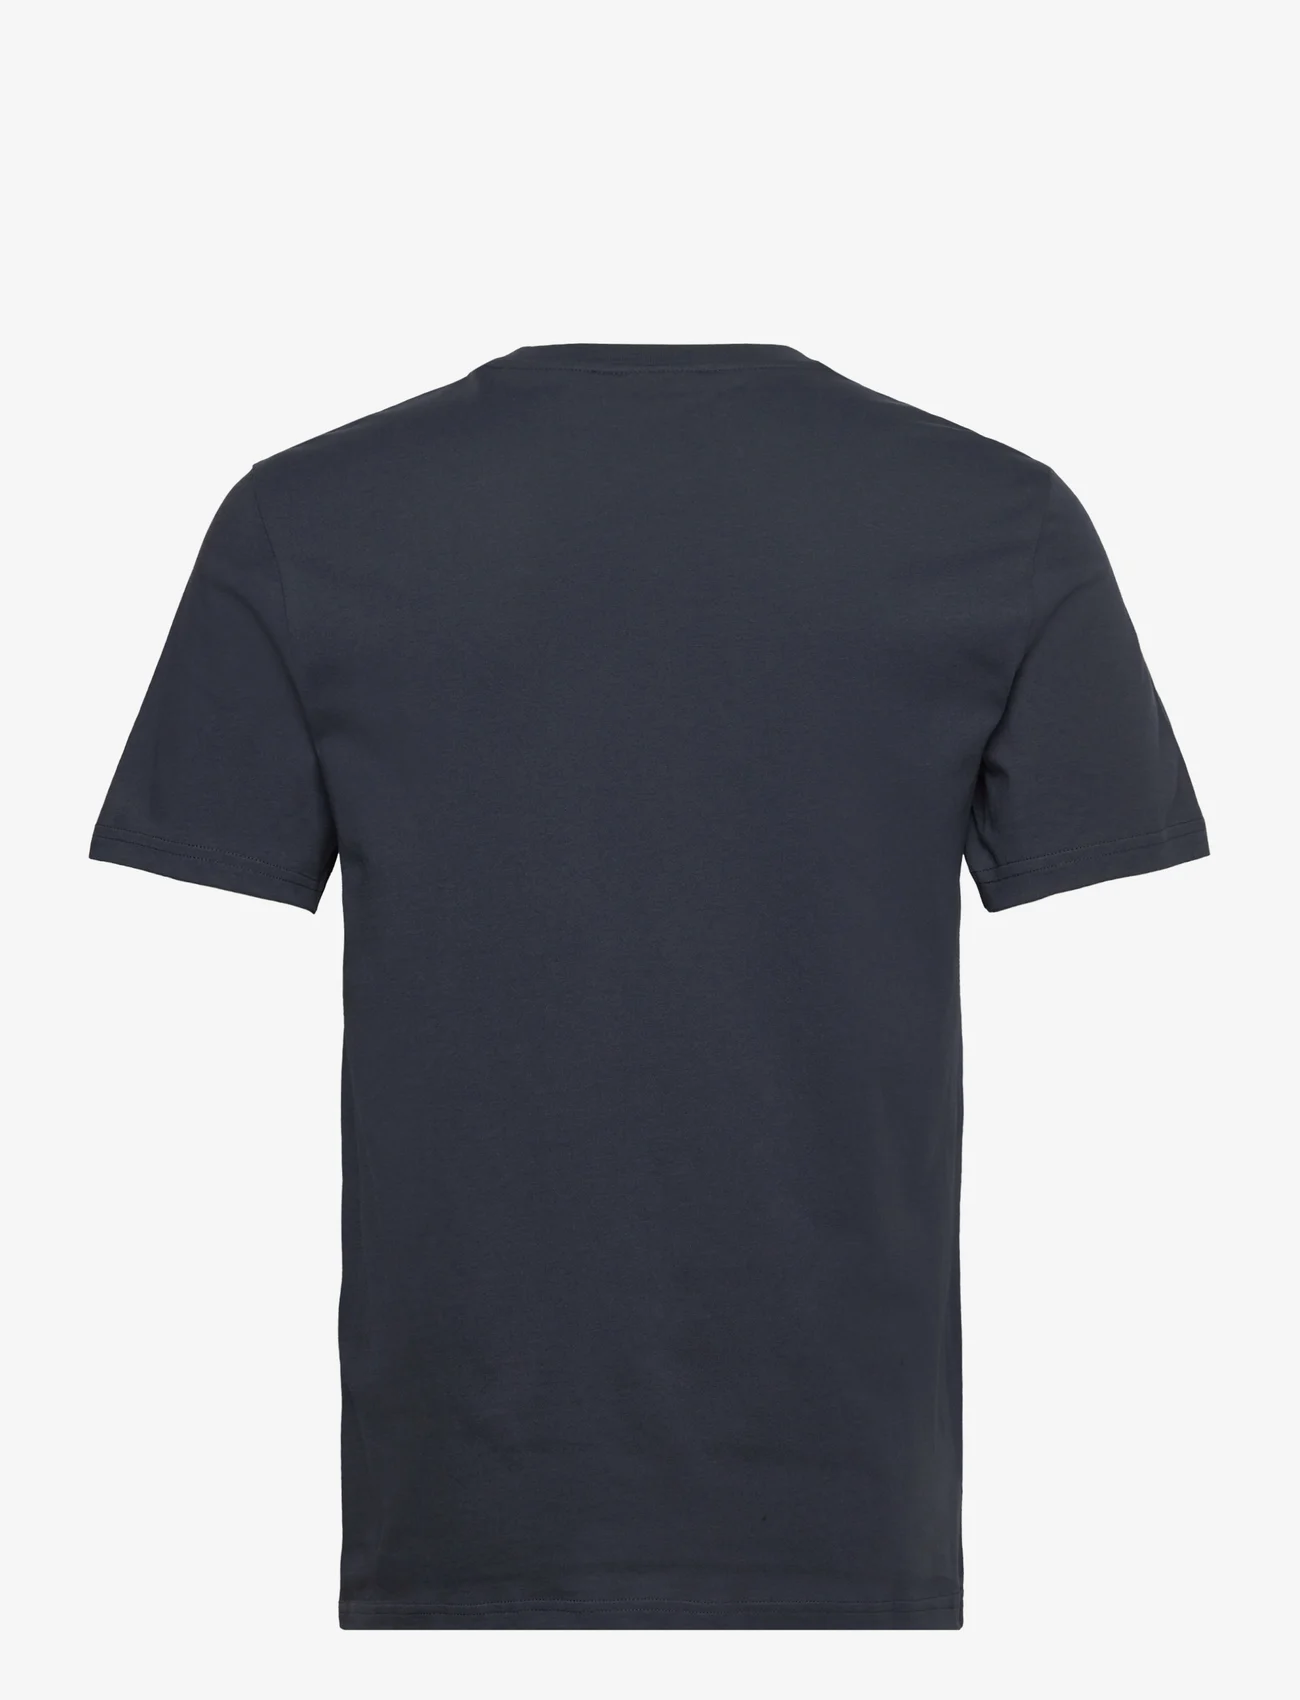 J. Lindeberg - M Cotton Blend T-shirt - kurzärmelige - jl navy - 1